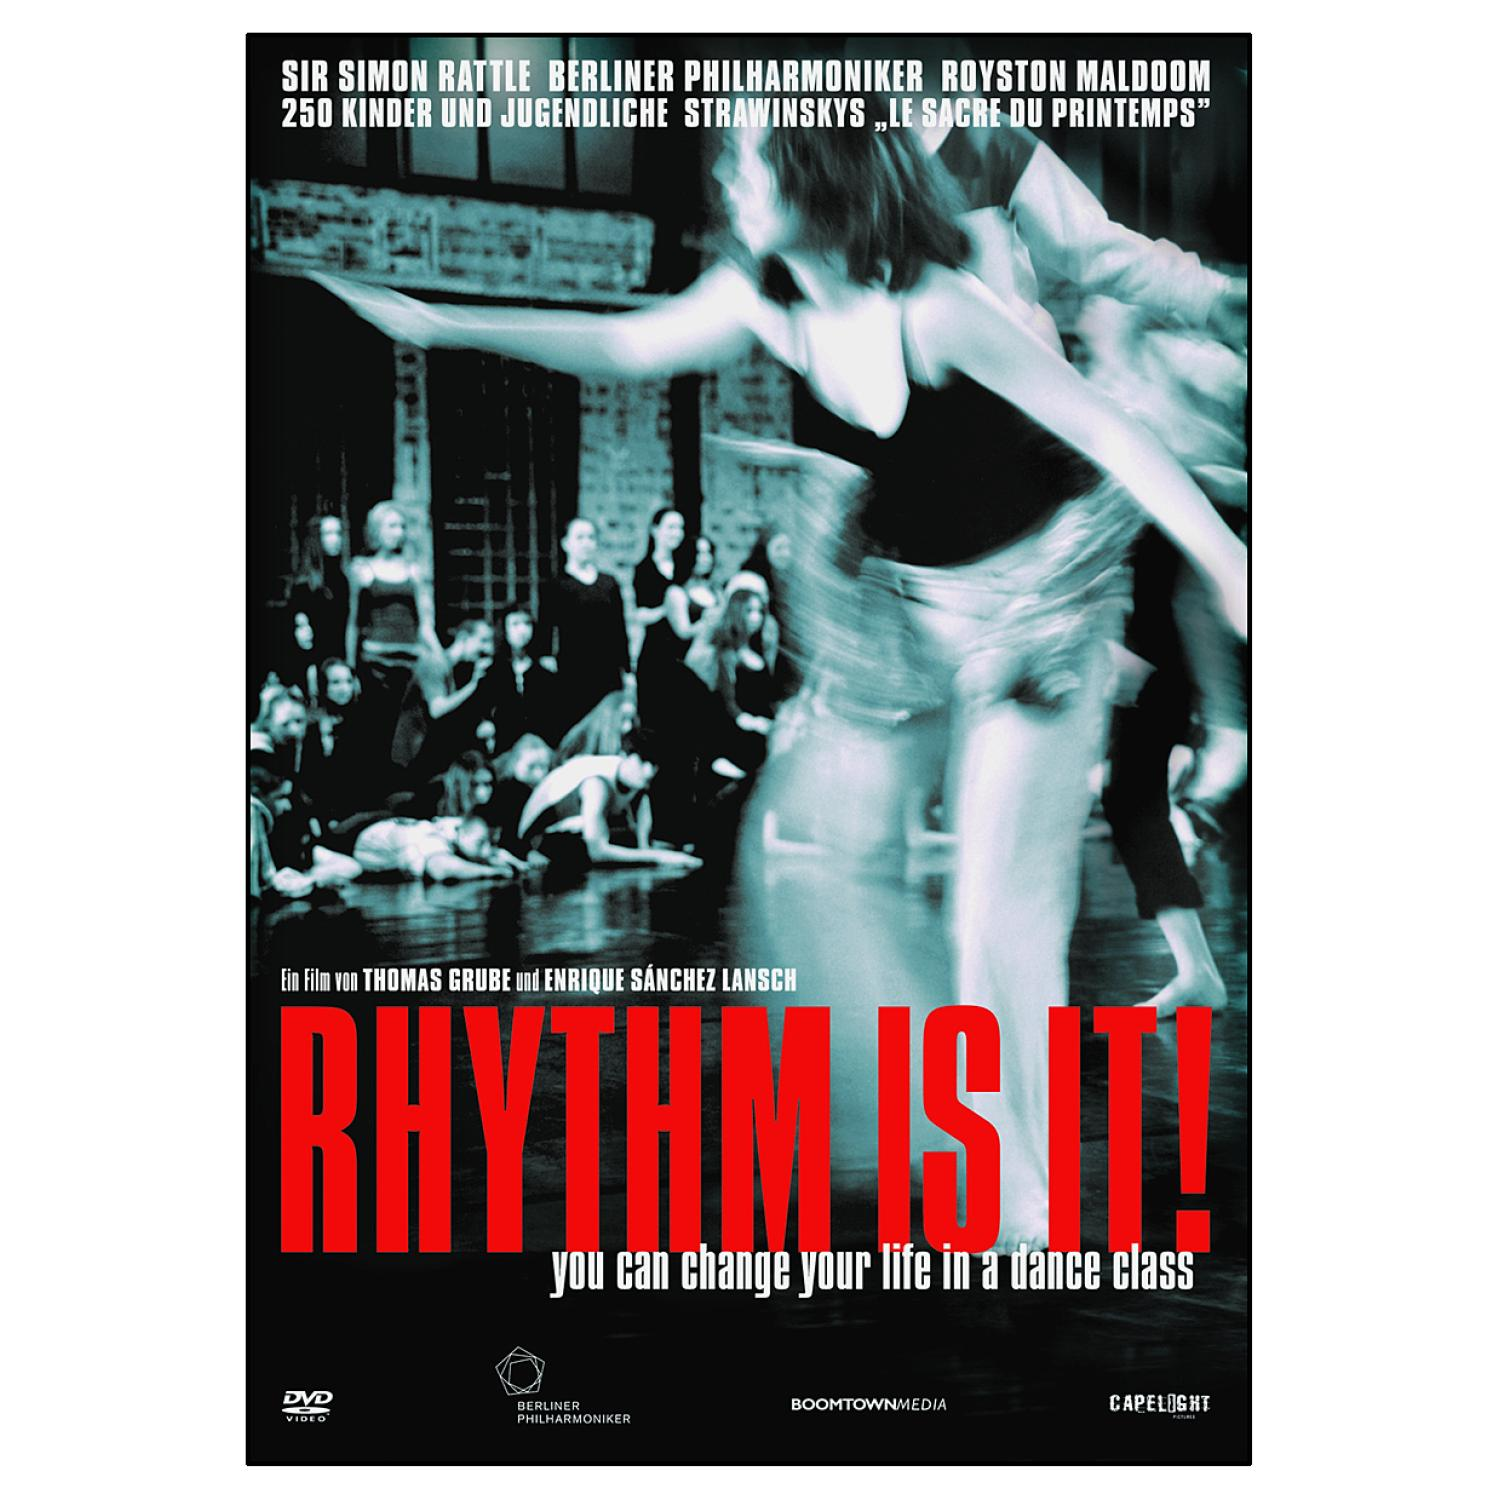 Sir Simon Rattle; - it! Philharmoniker Berliner (DVD) - is Rhythm